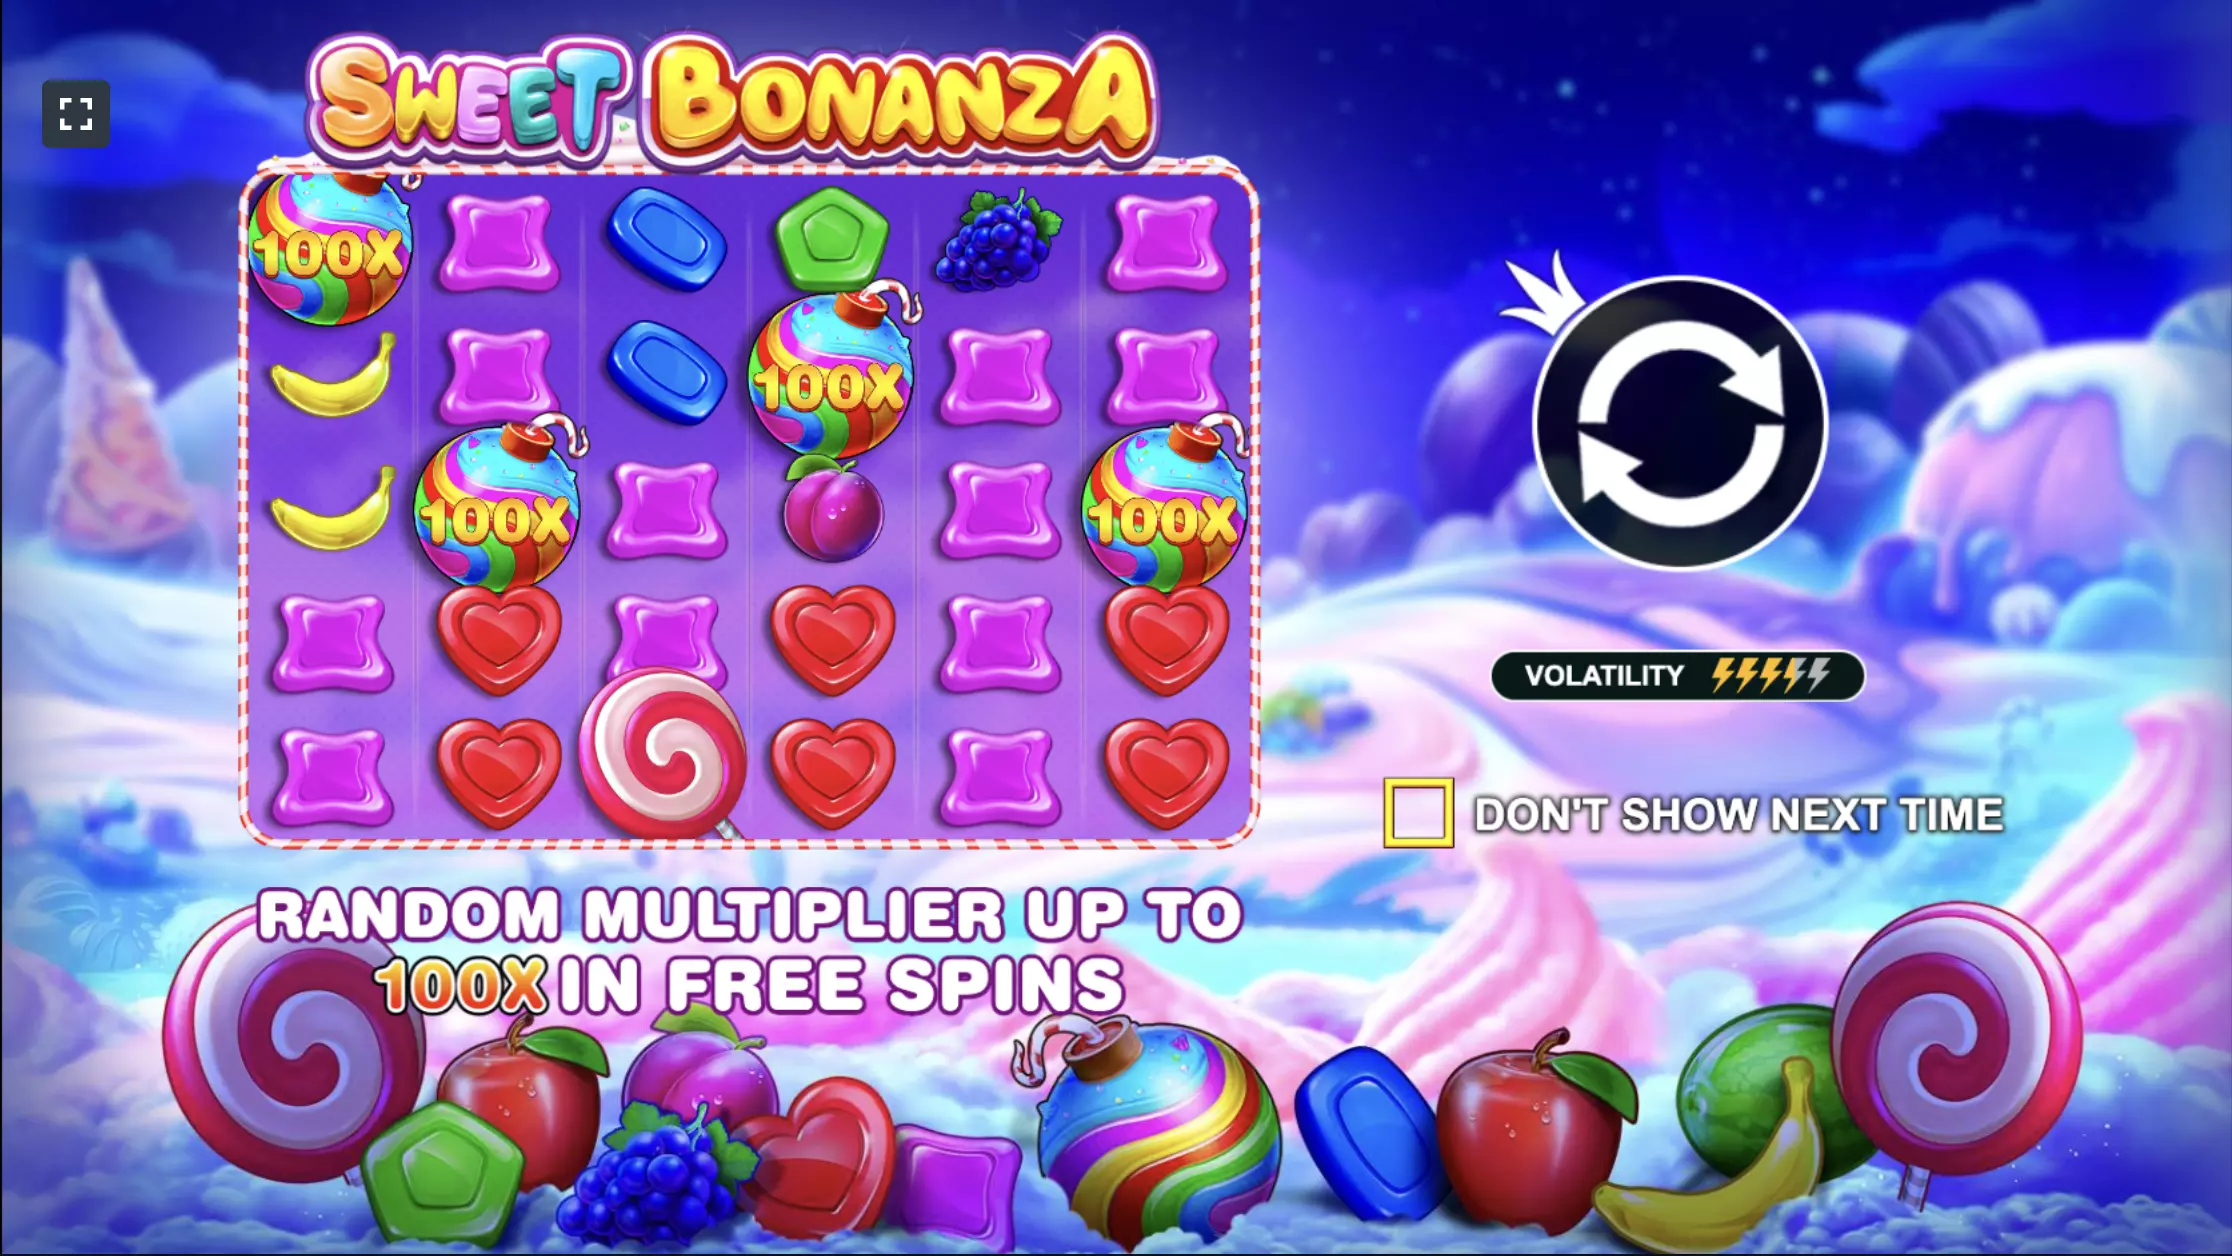 Play sweet bonanza slot